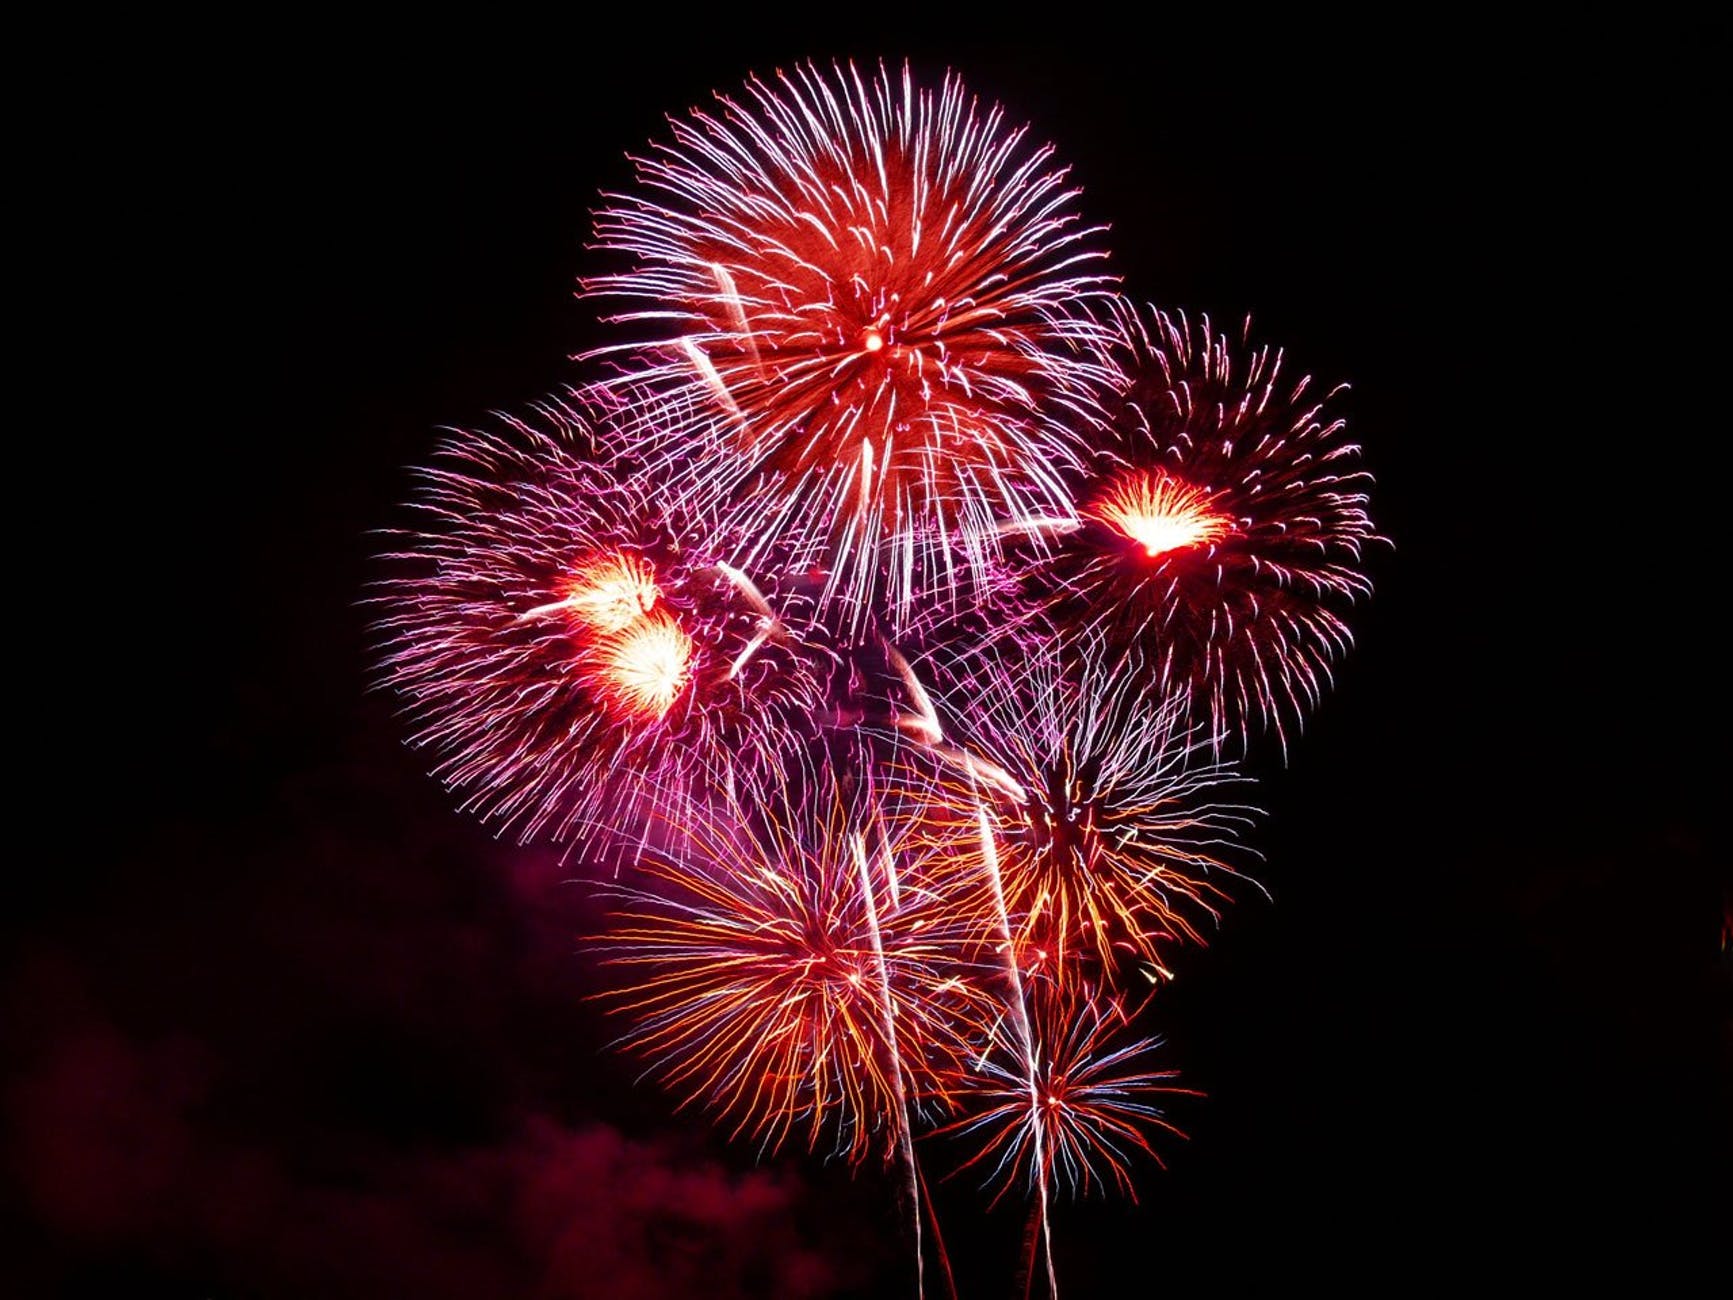 purple red white and orange fireworks display